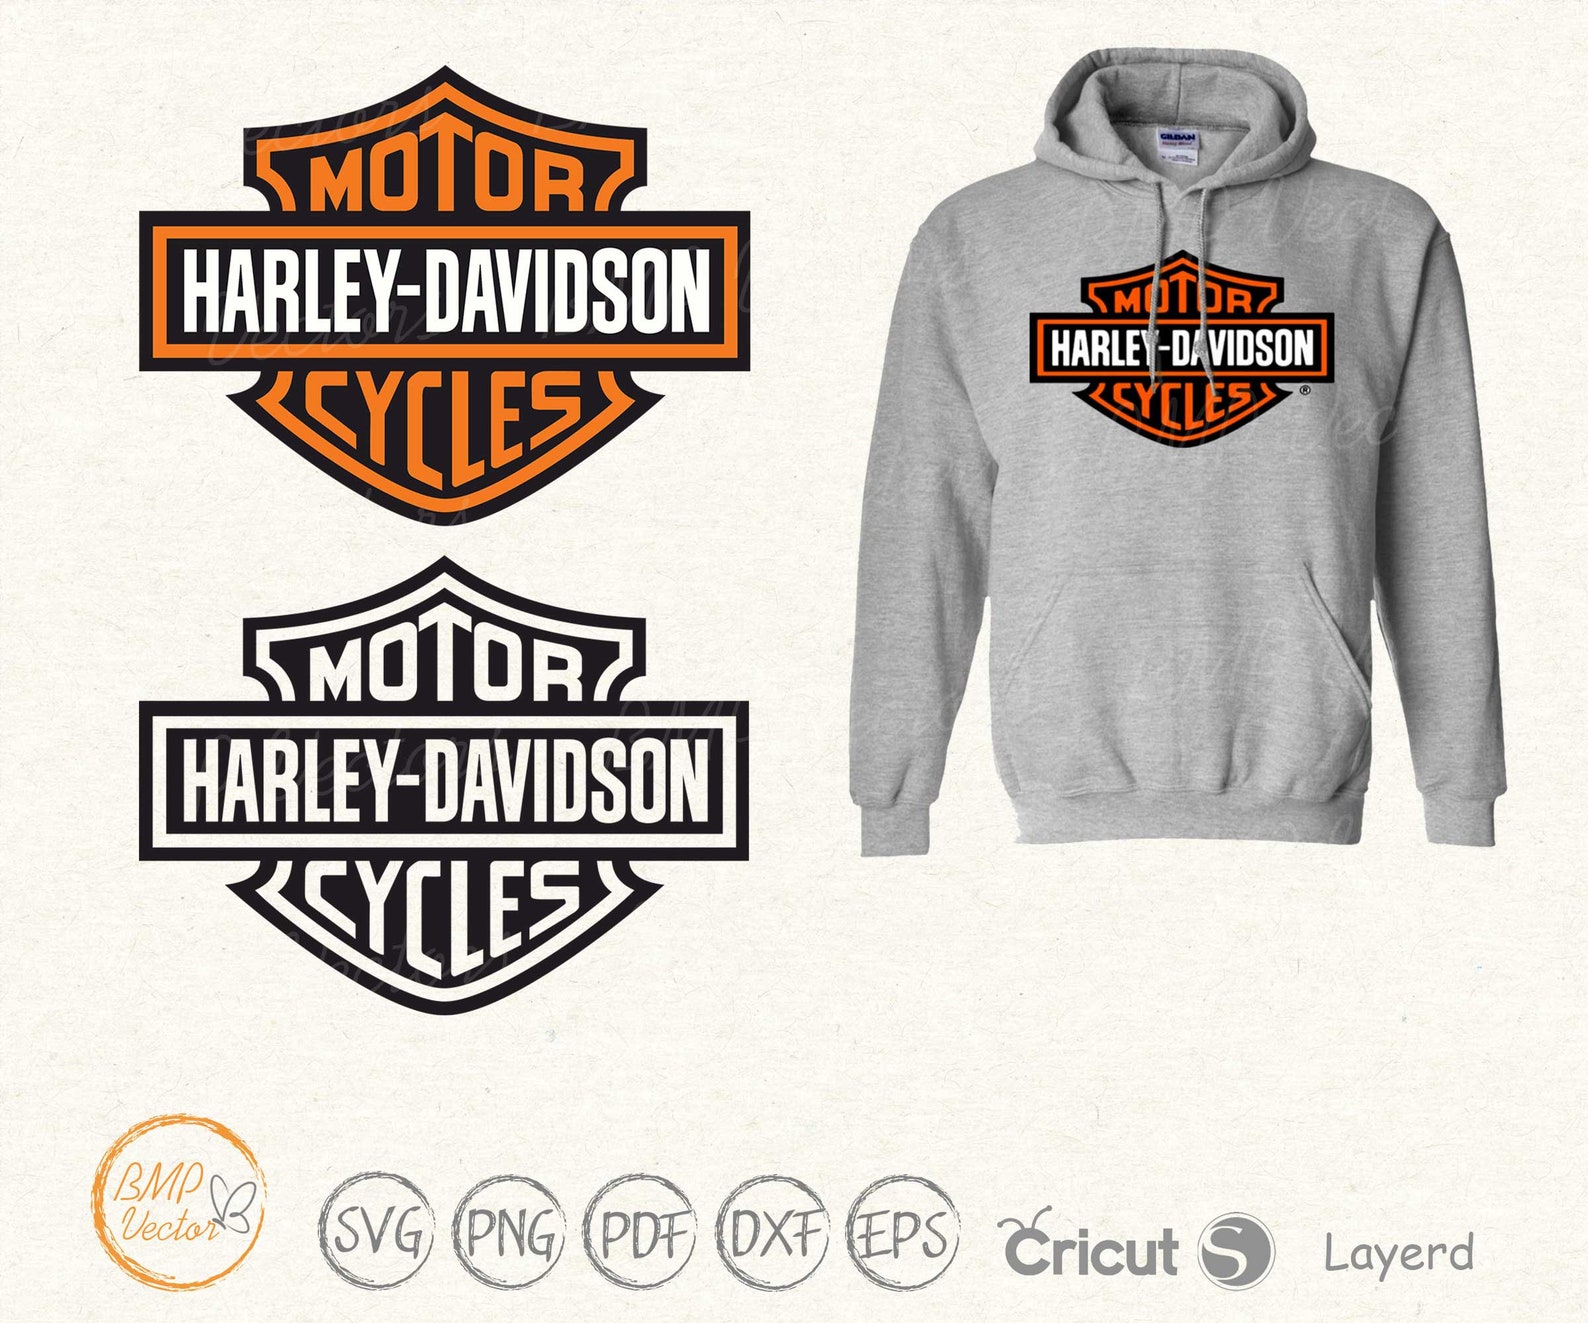 Hoodie with Harley Davidson logo.